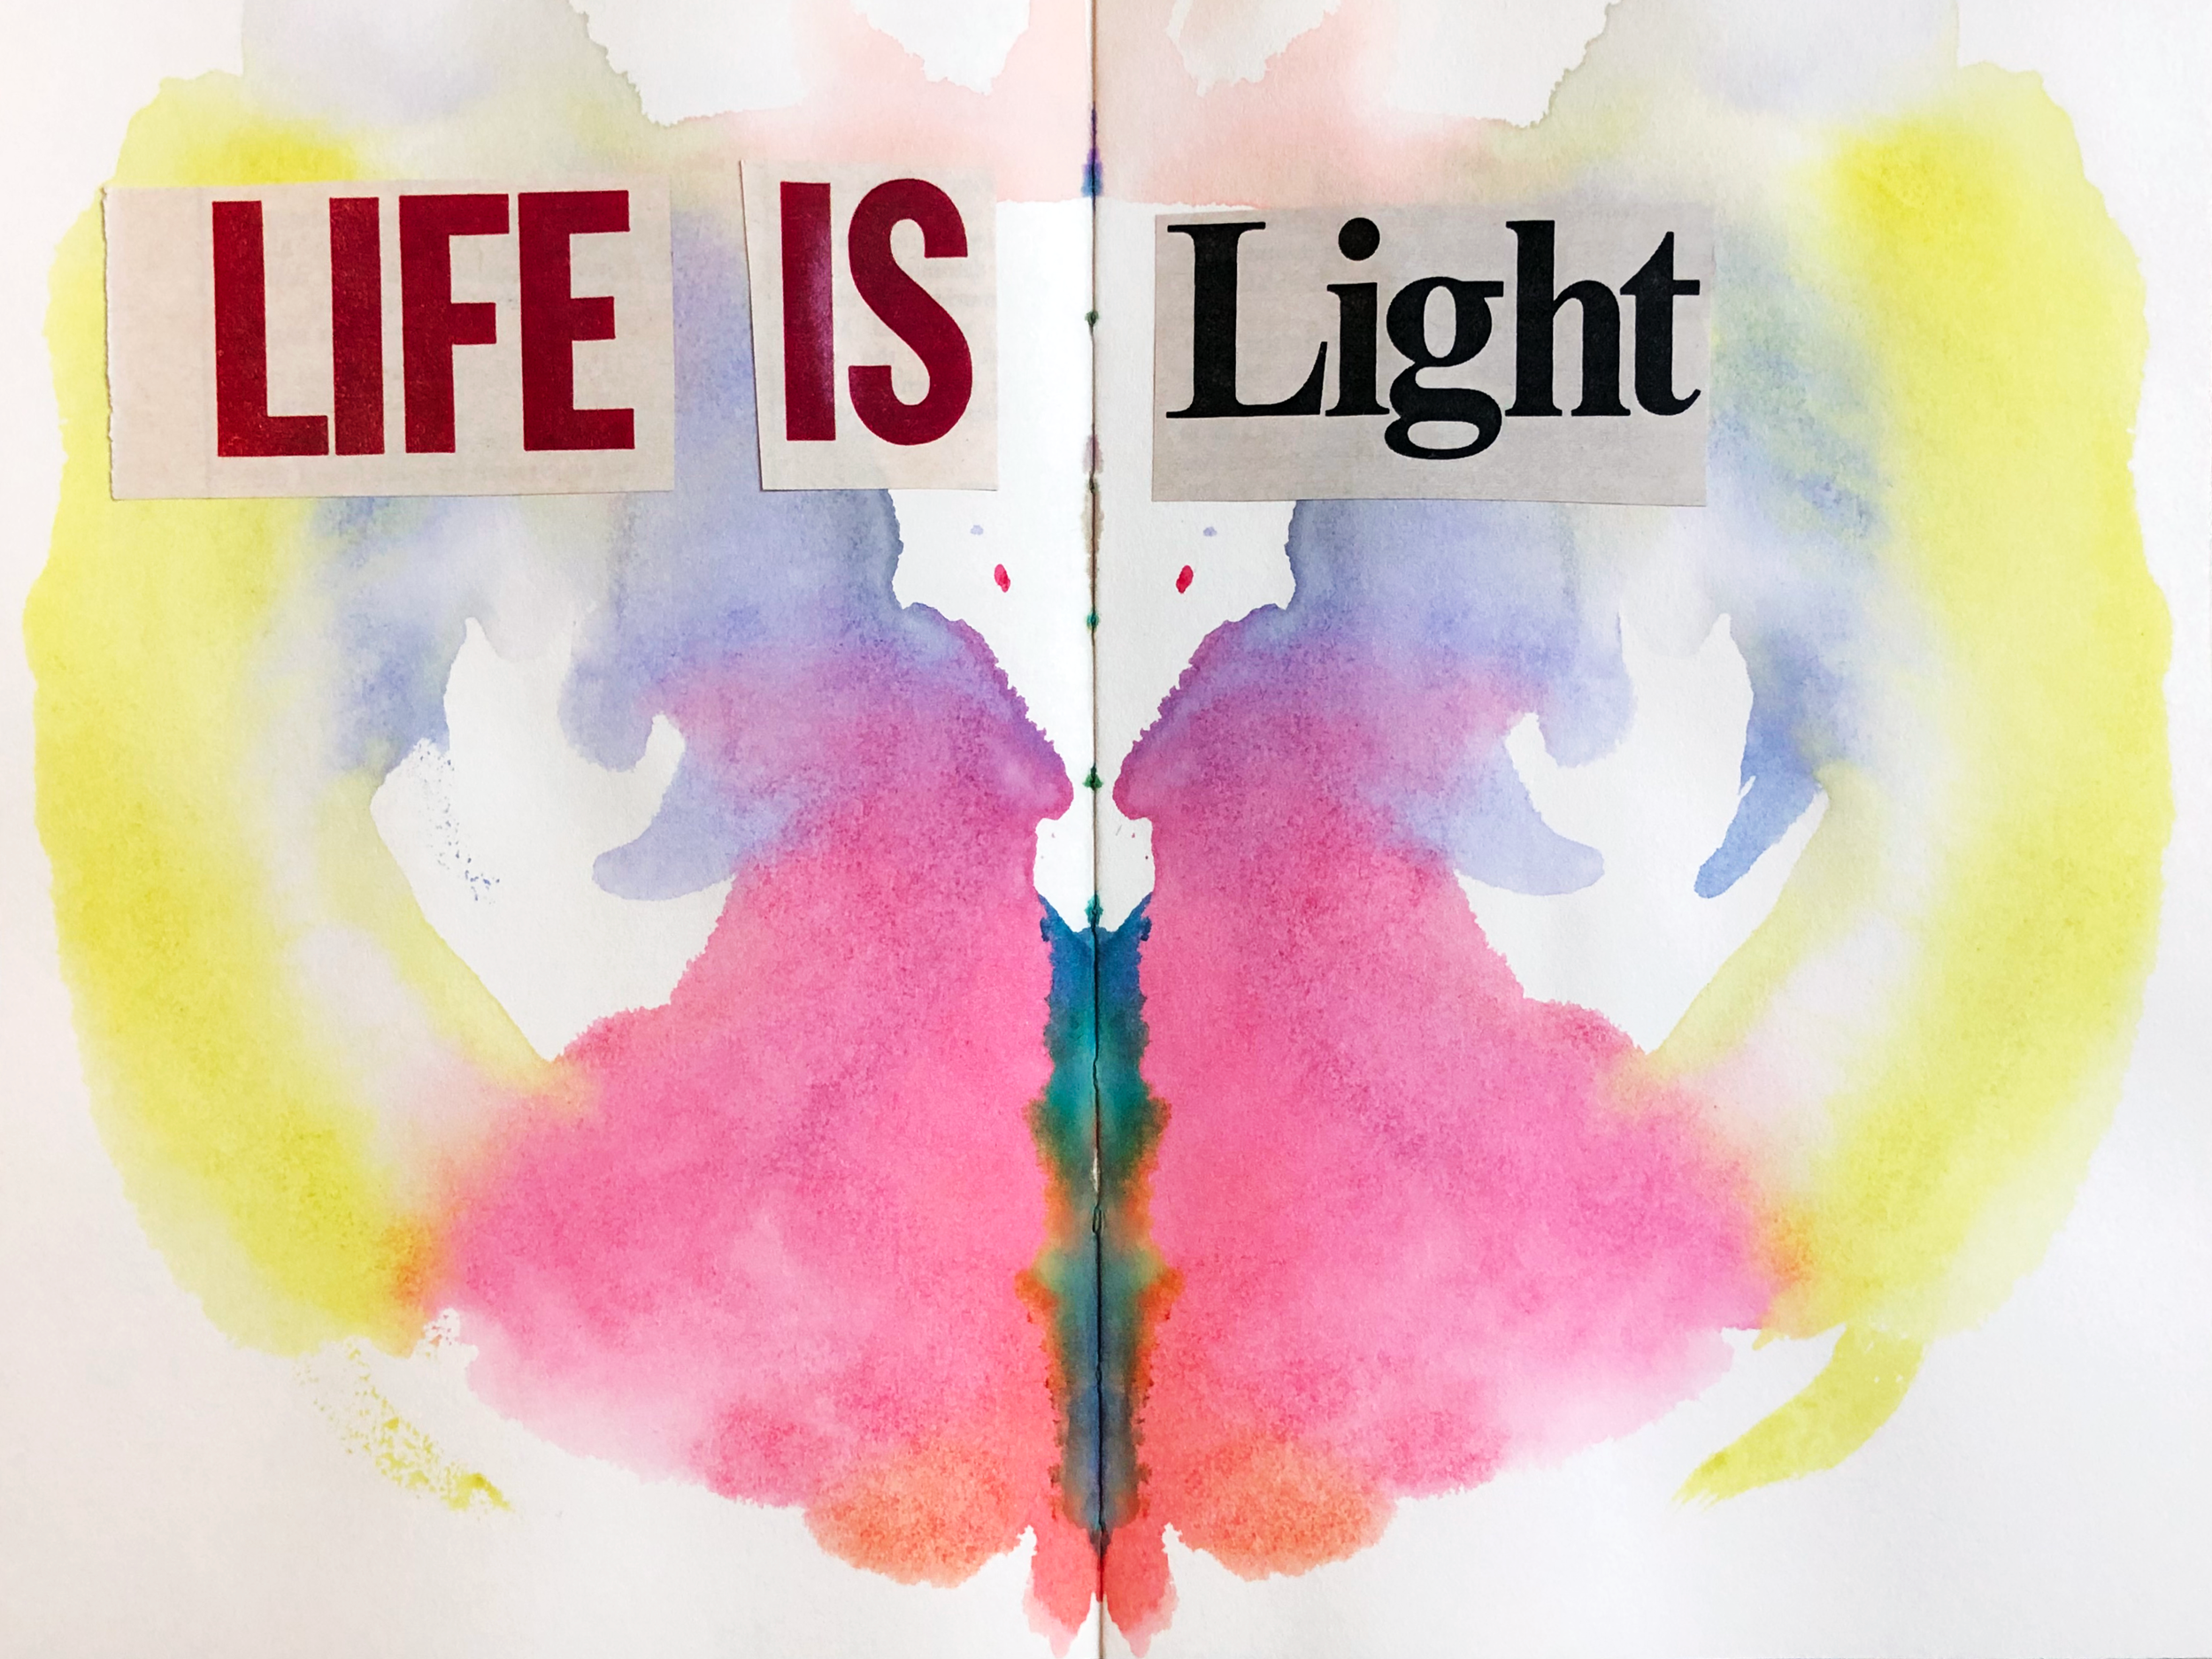 Life is light